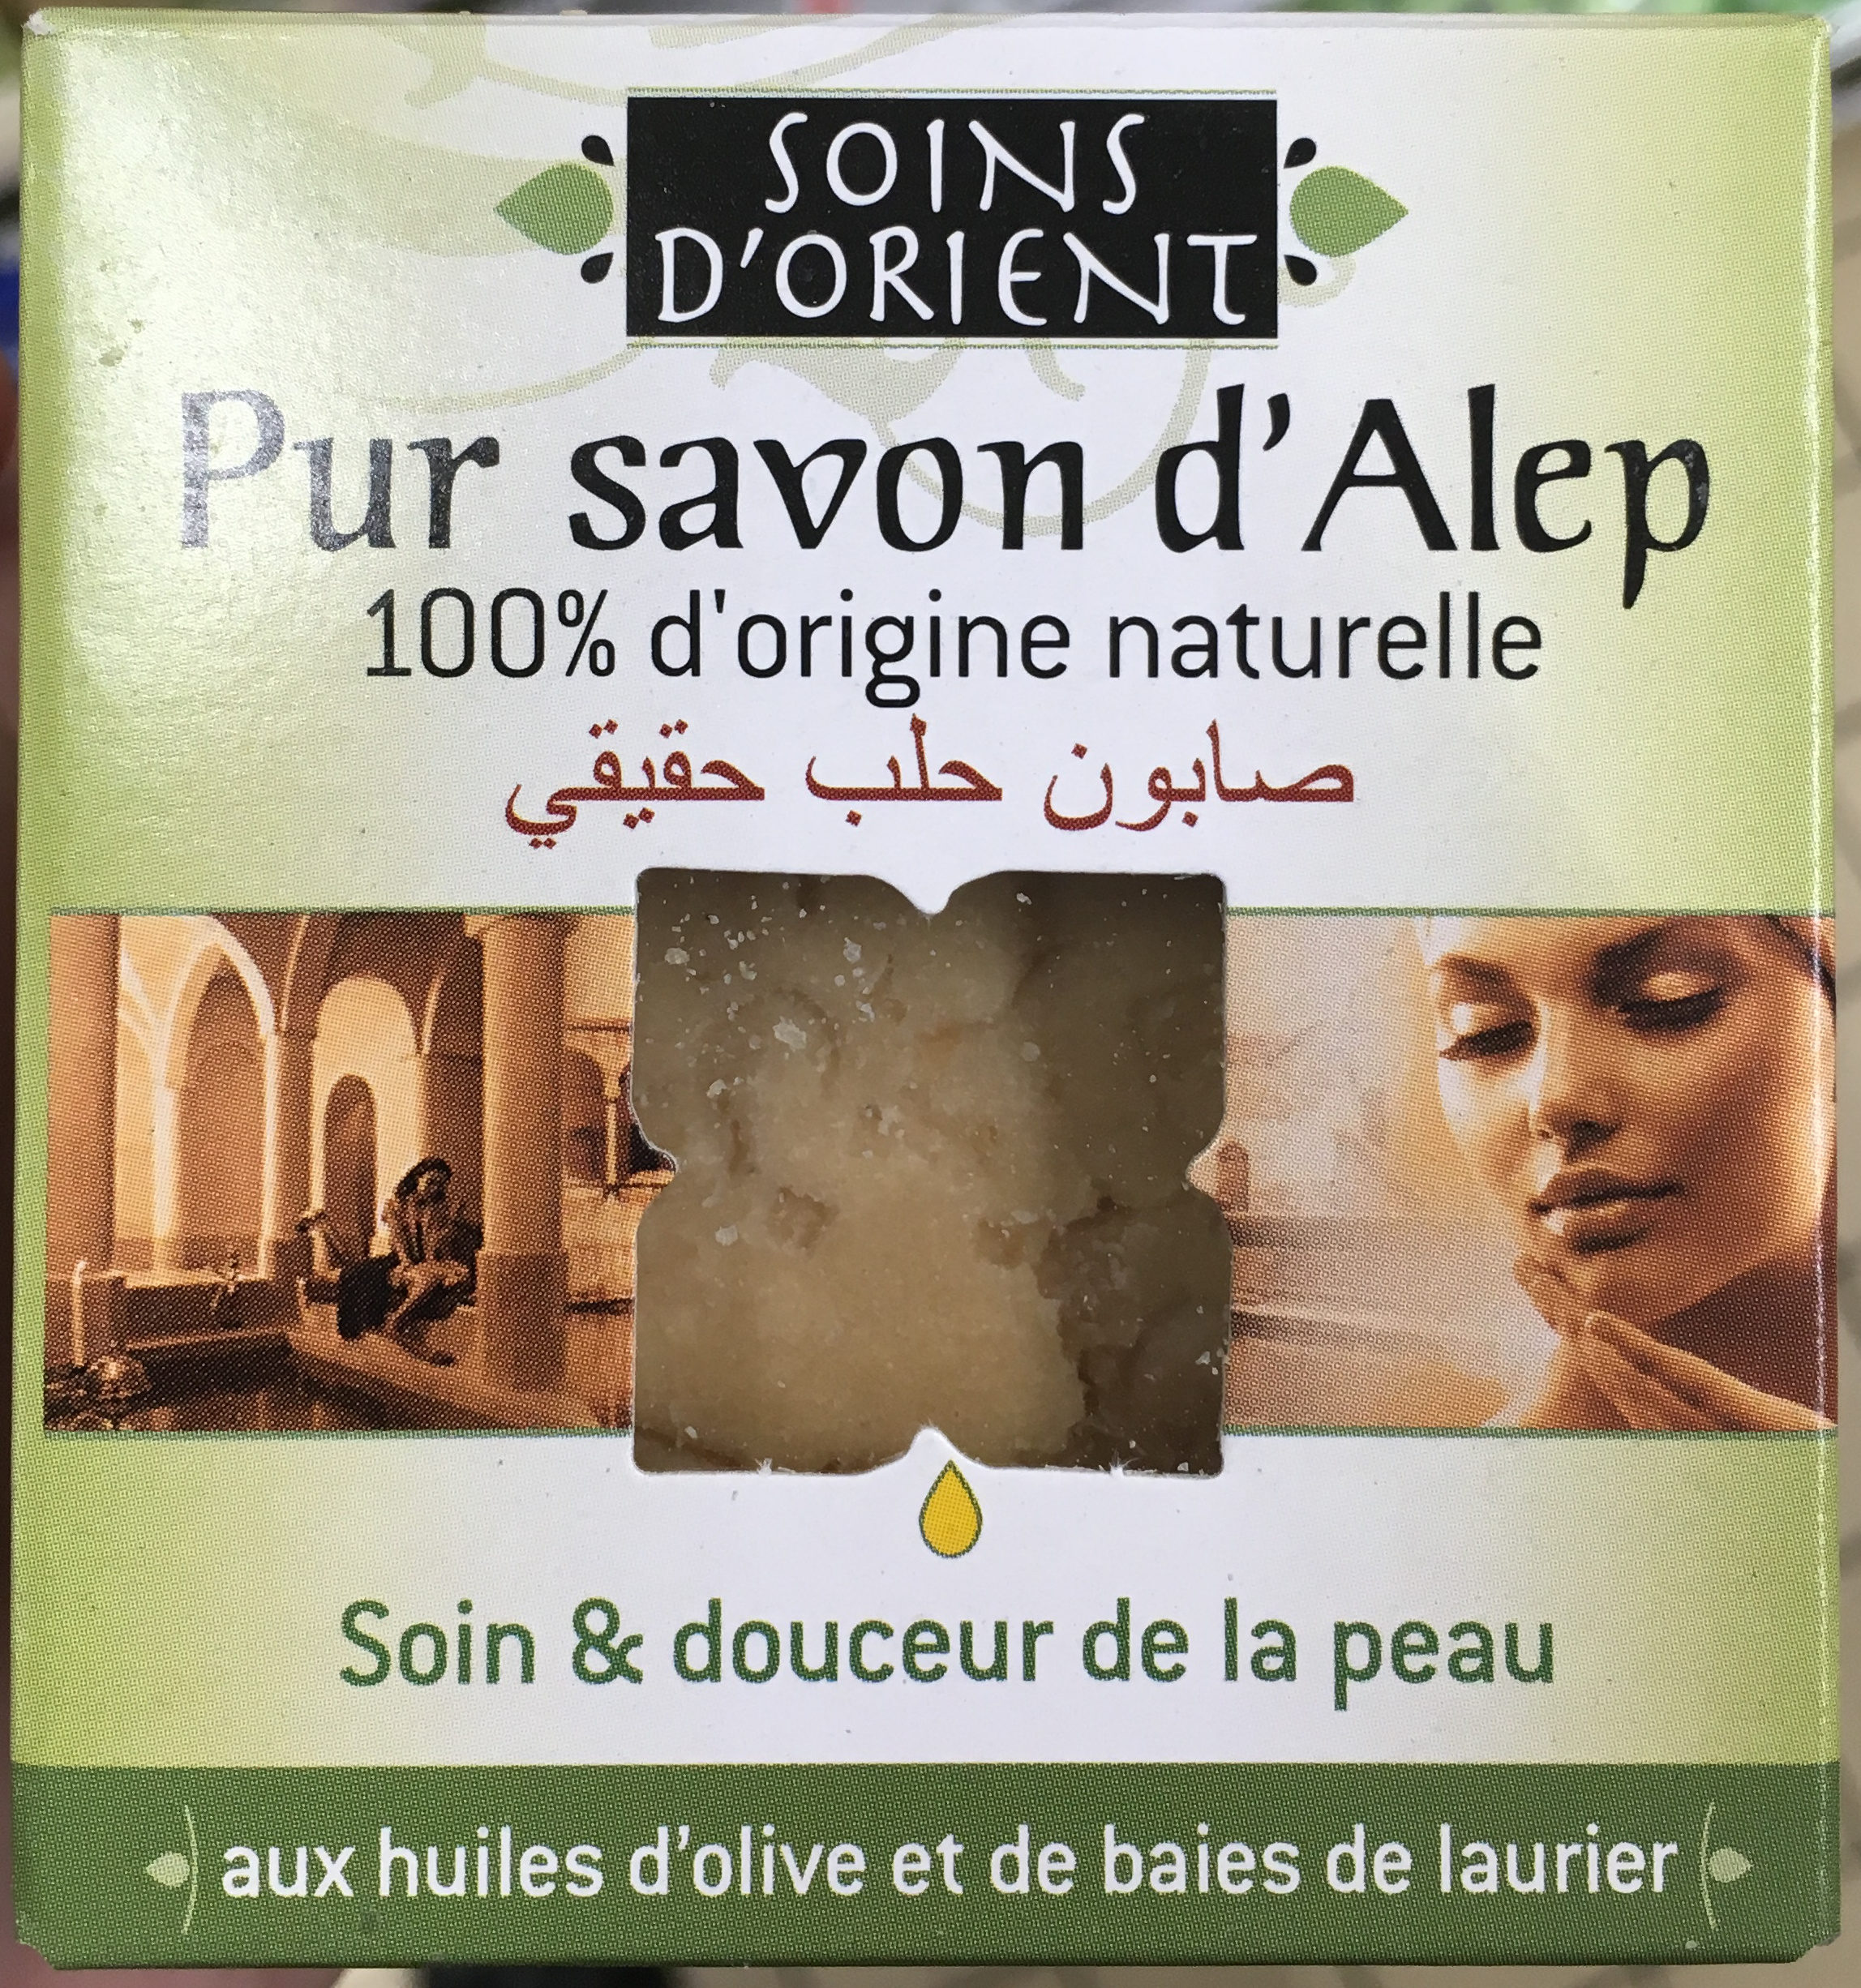 Pur savon d'Alep - Product - fr